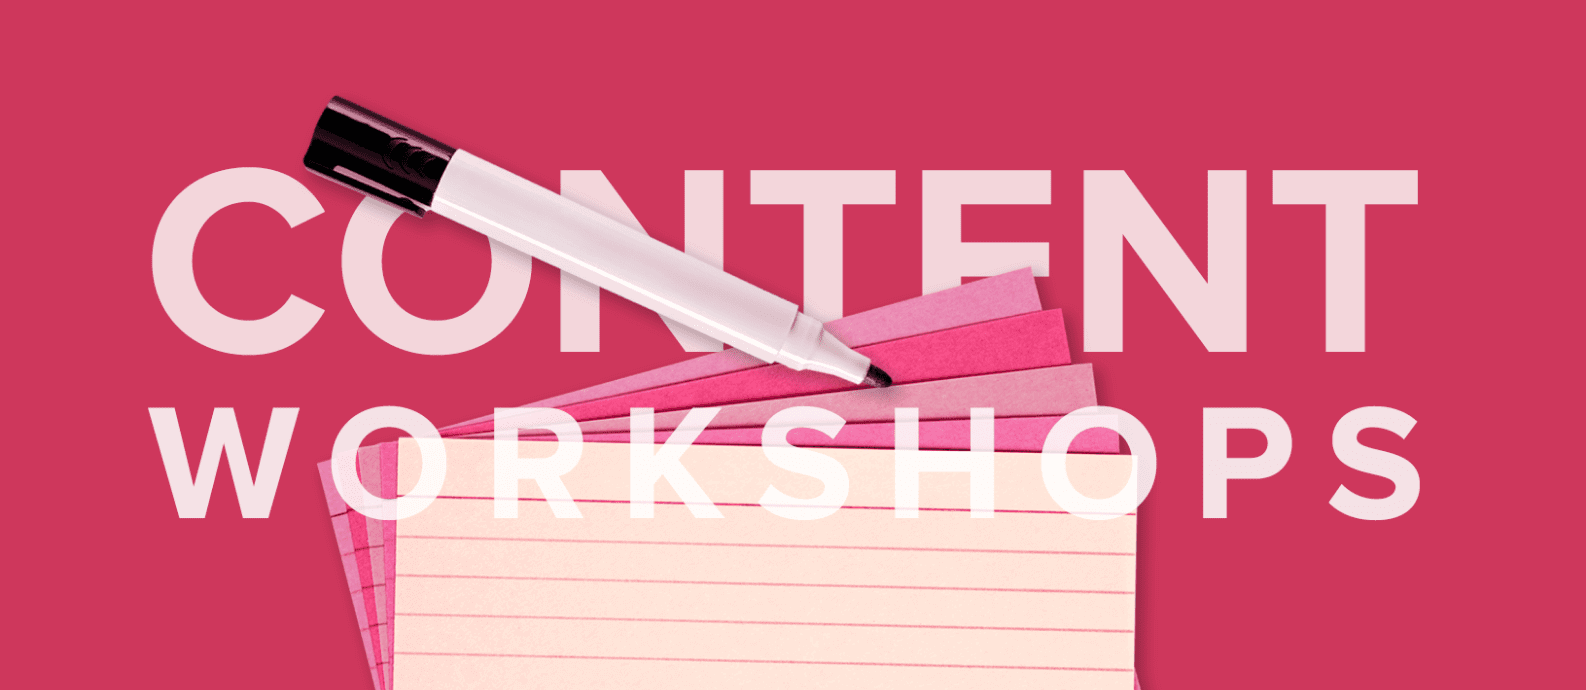 Website Content workshops